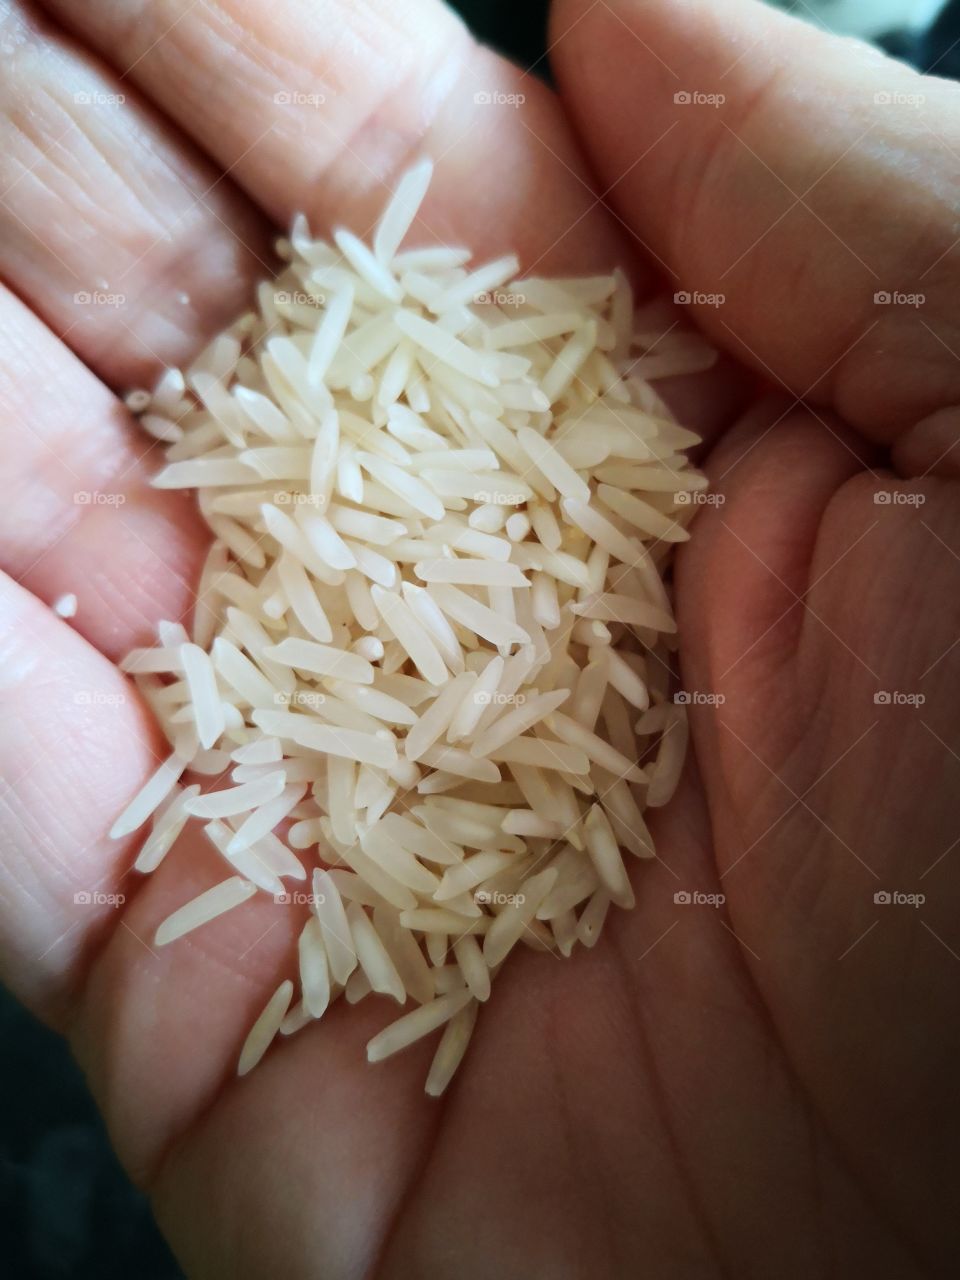 Last grains of rice